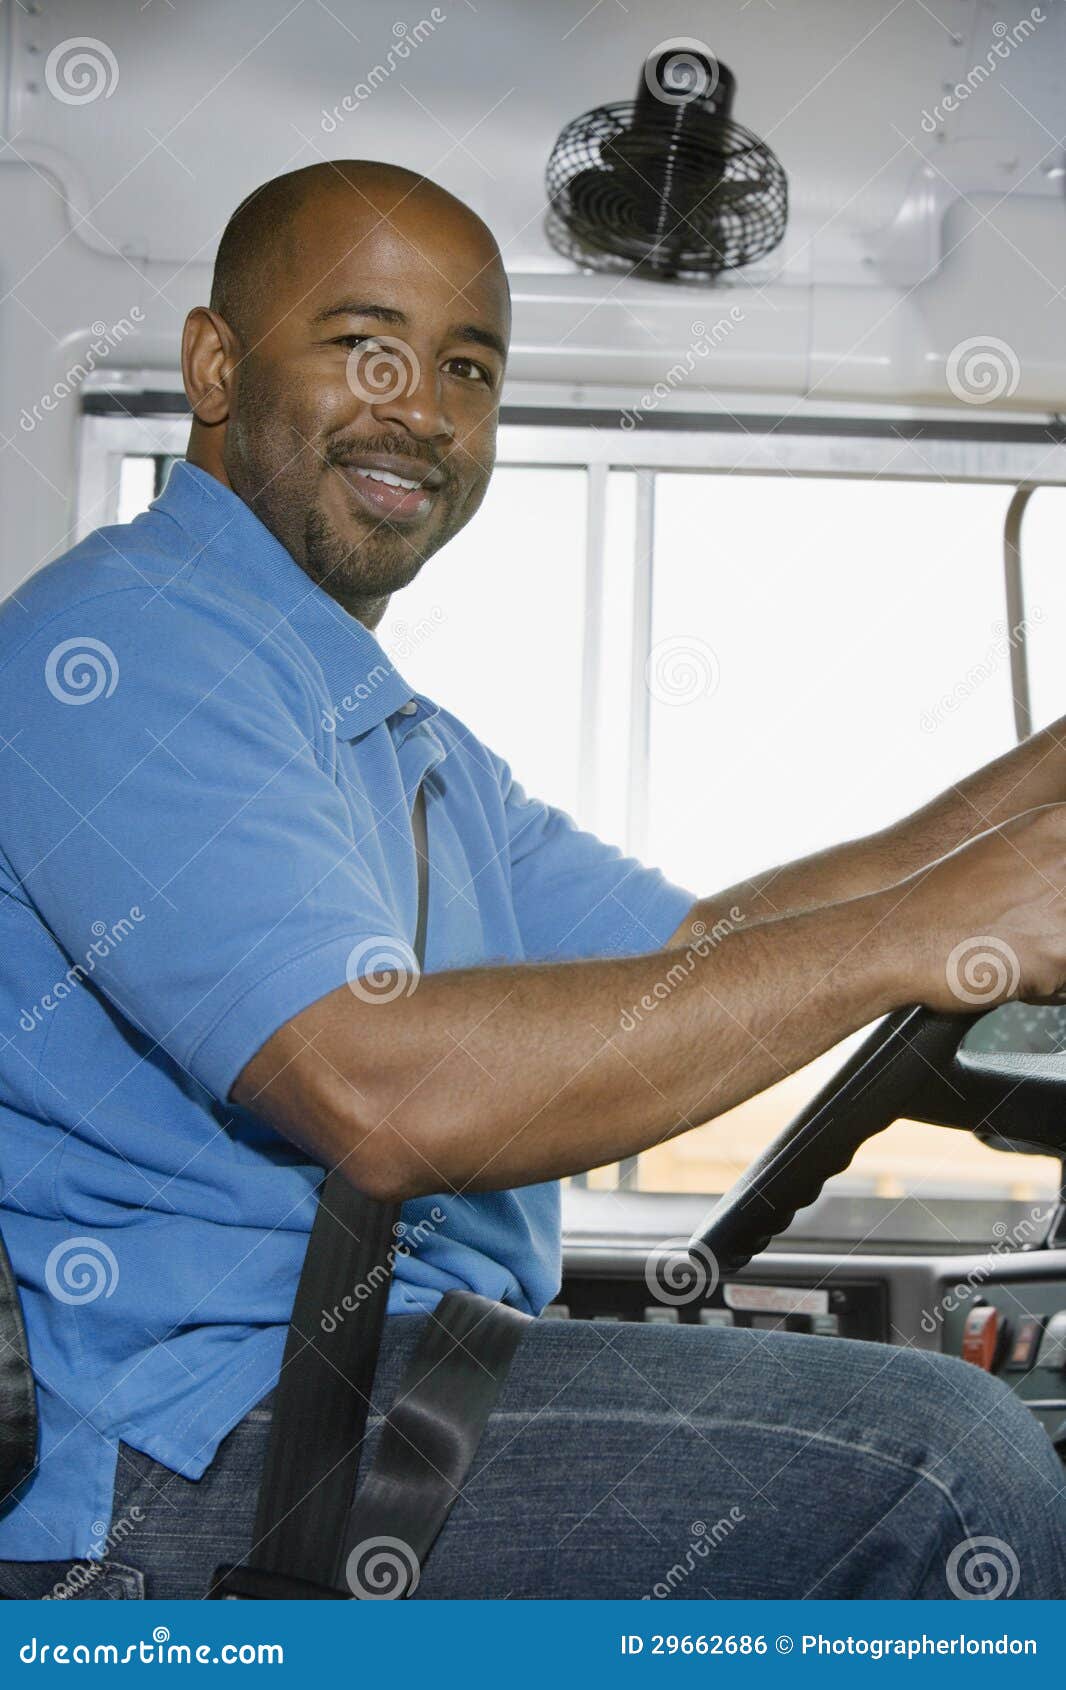 school bus driver smiling